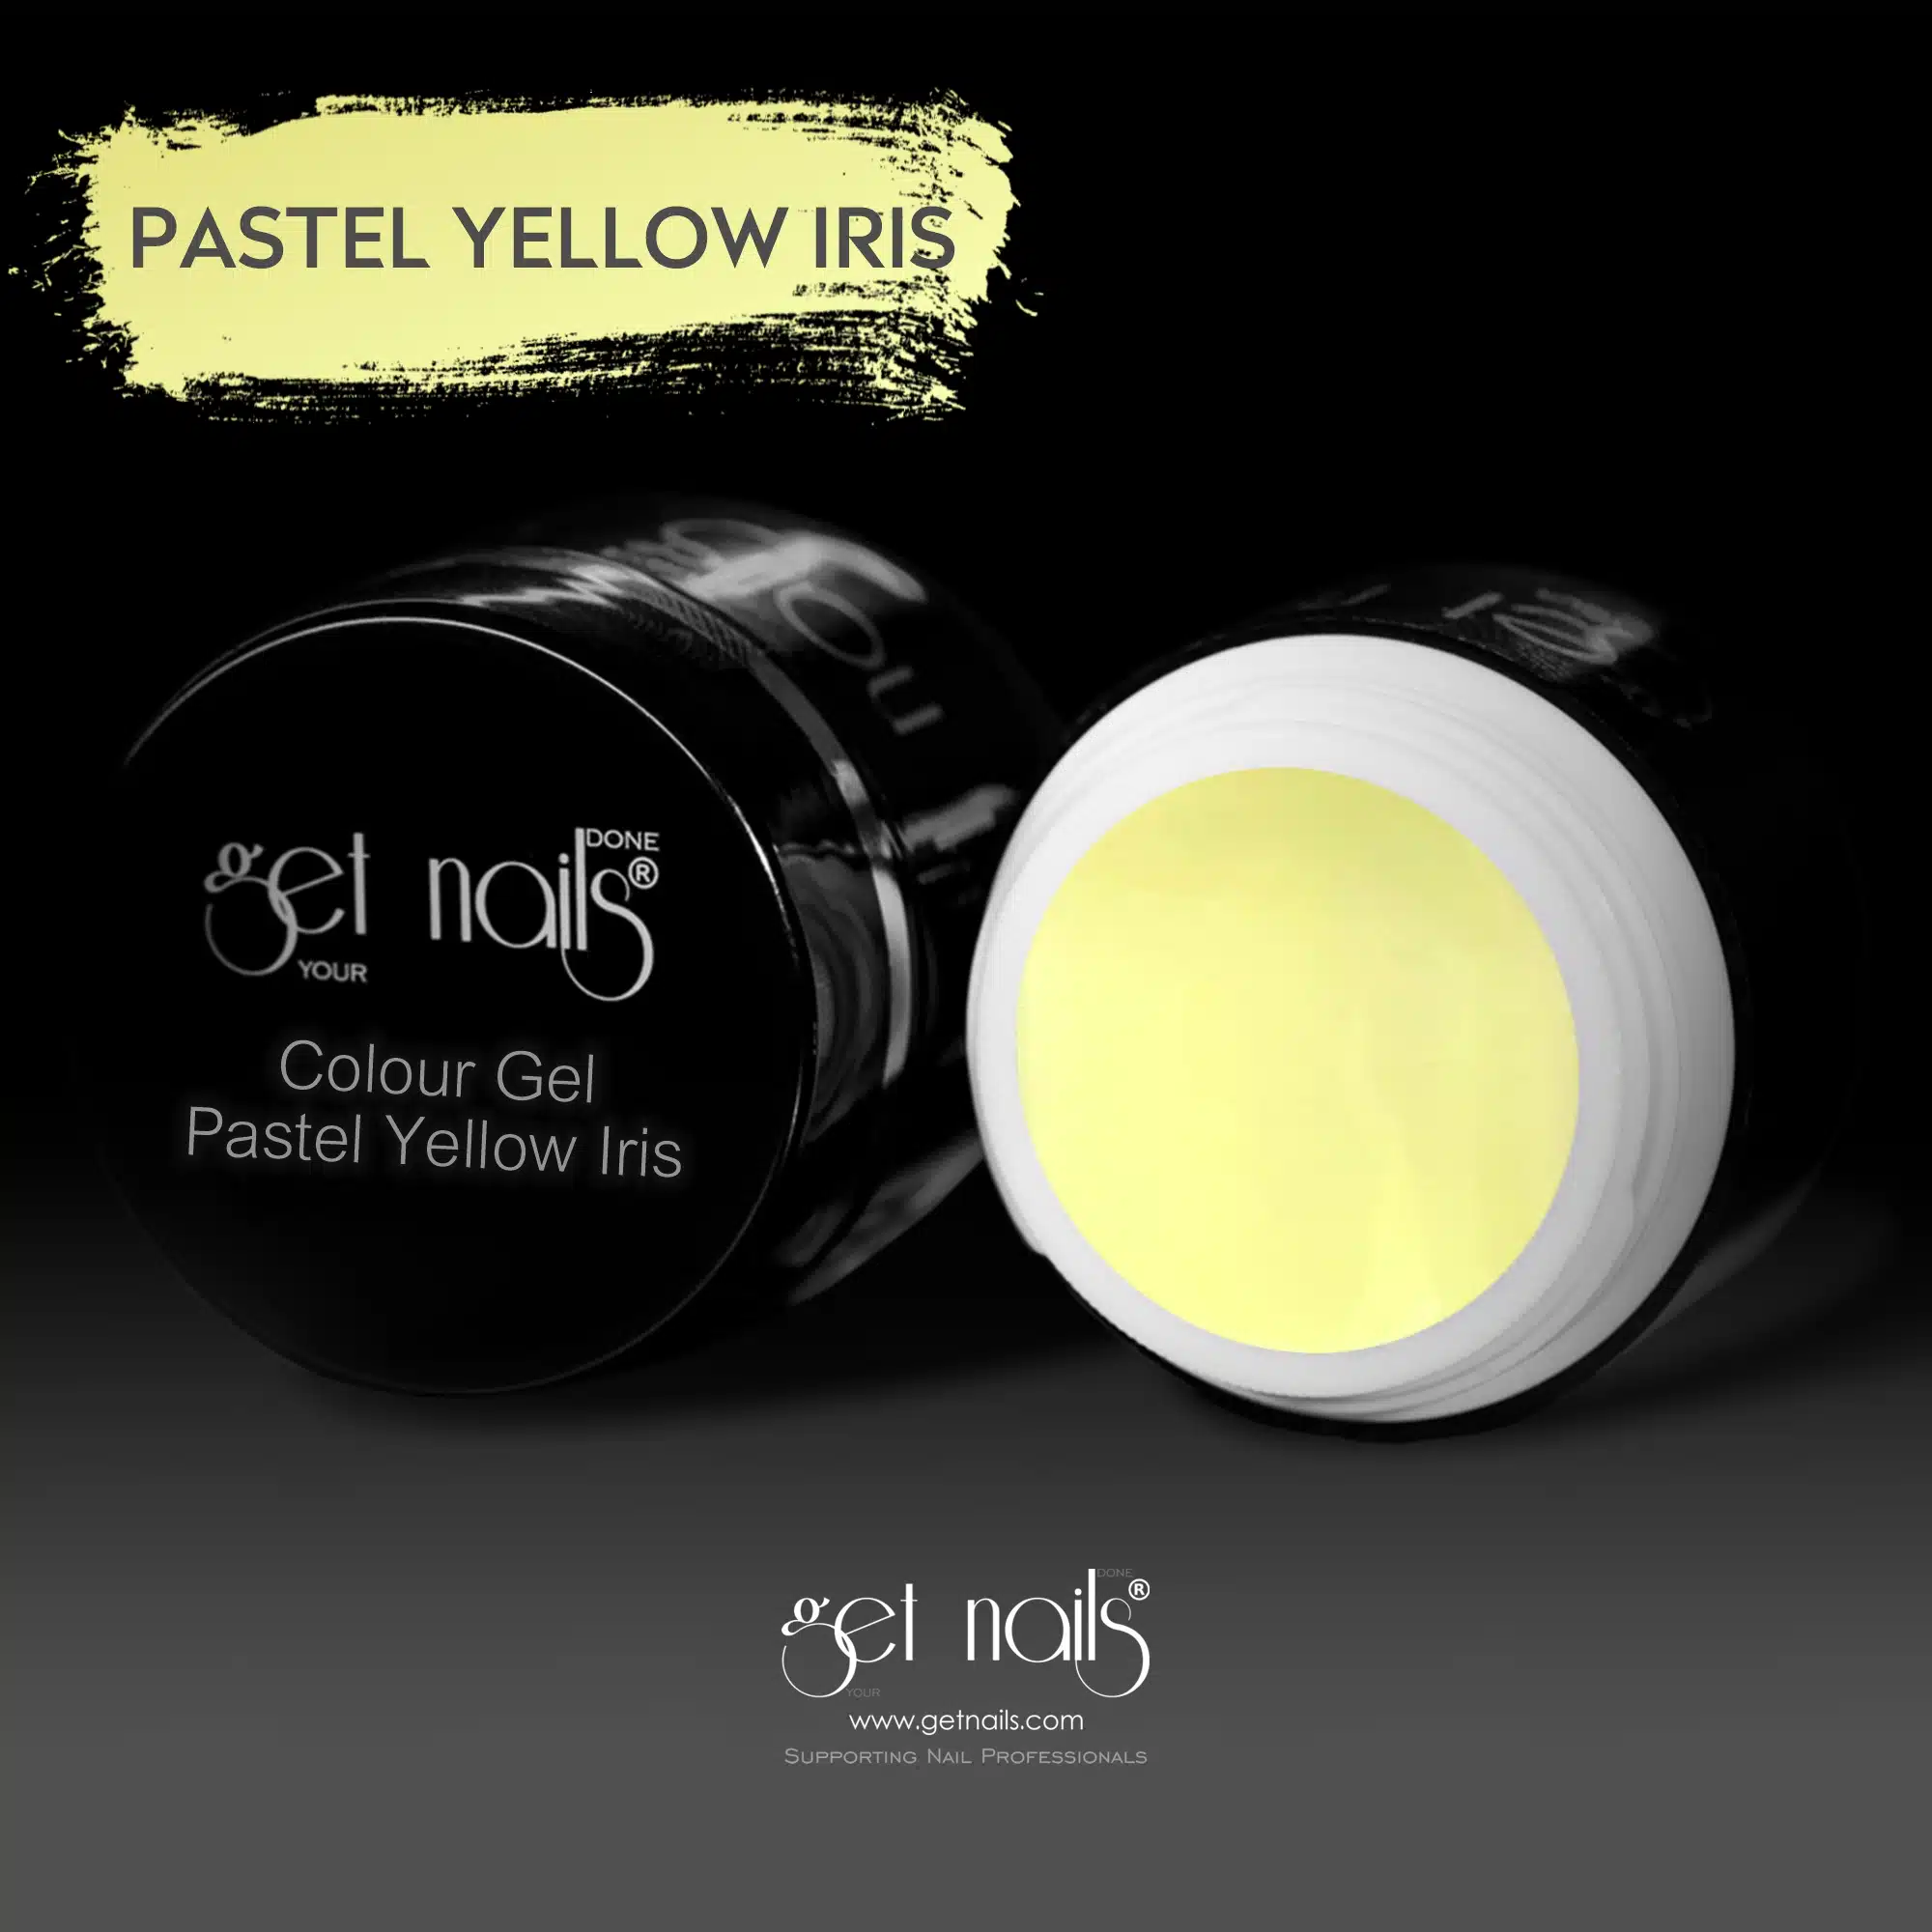 Get Nails Austria - Gel colorato Pastel Yellow Iris 5g